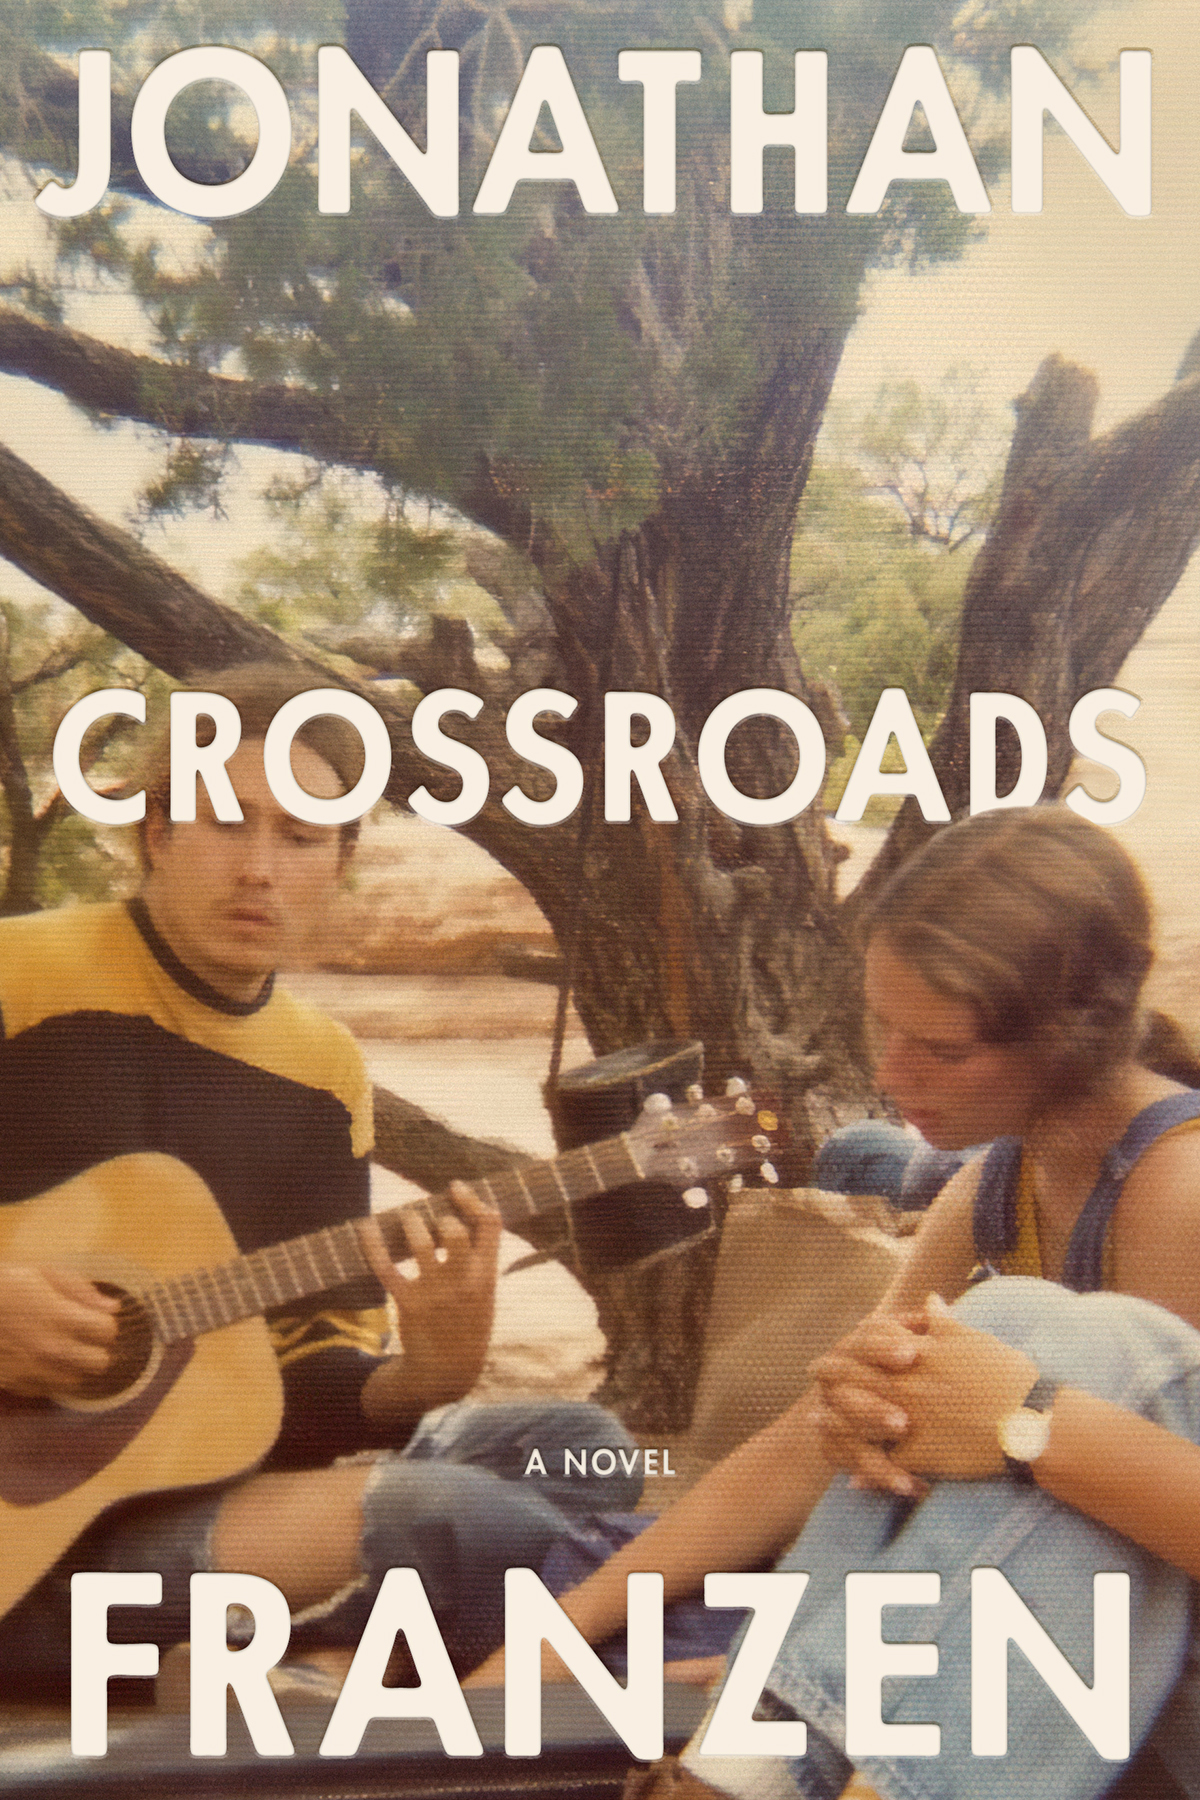 Virtual event with Jonathan Franzen/Crossroads